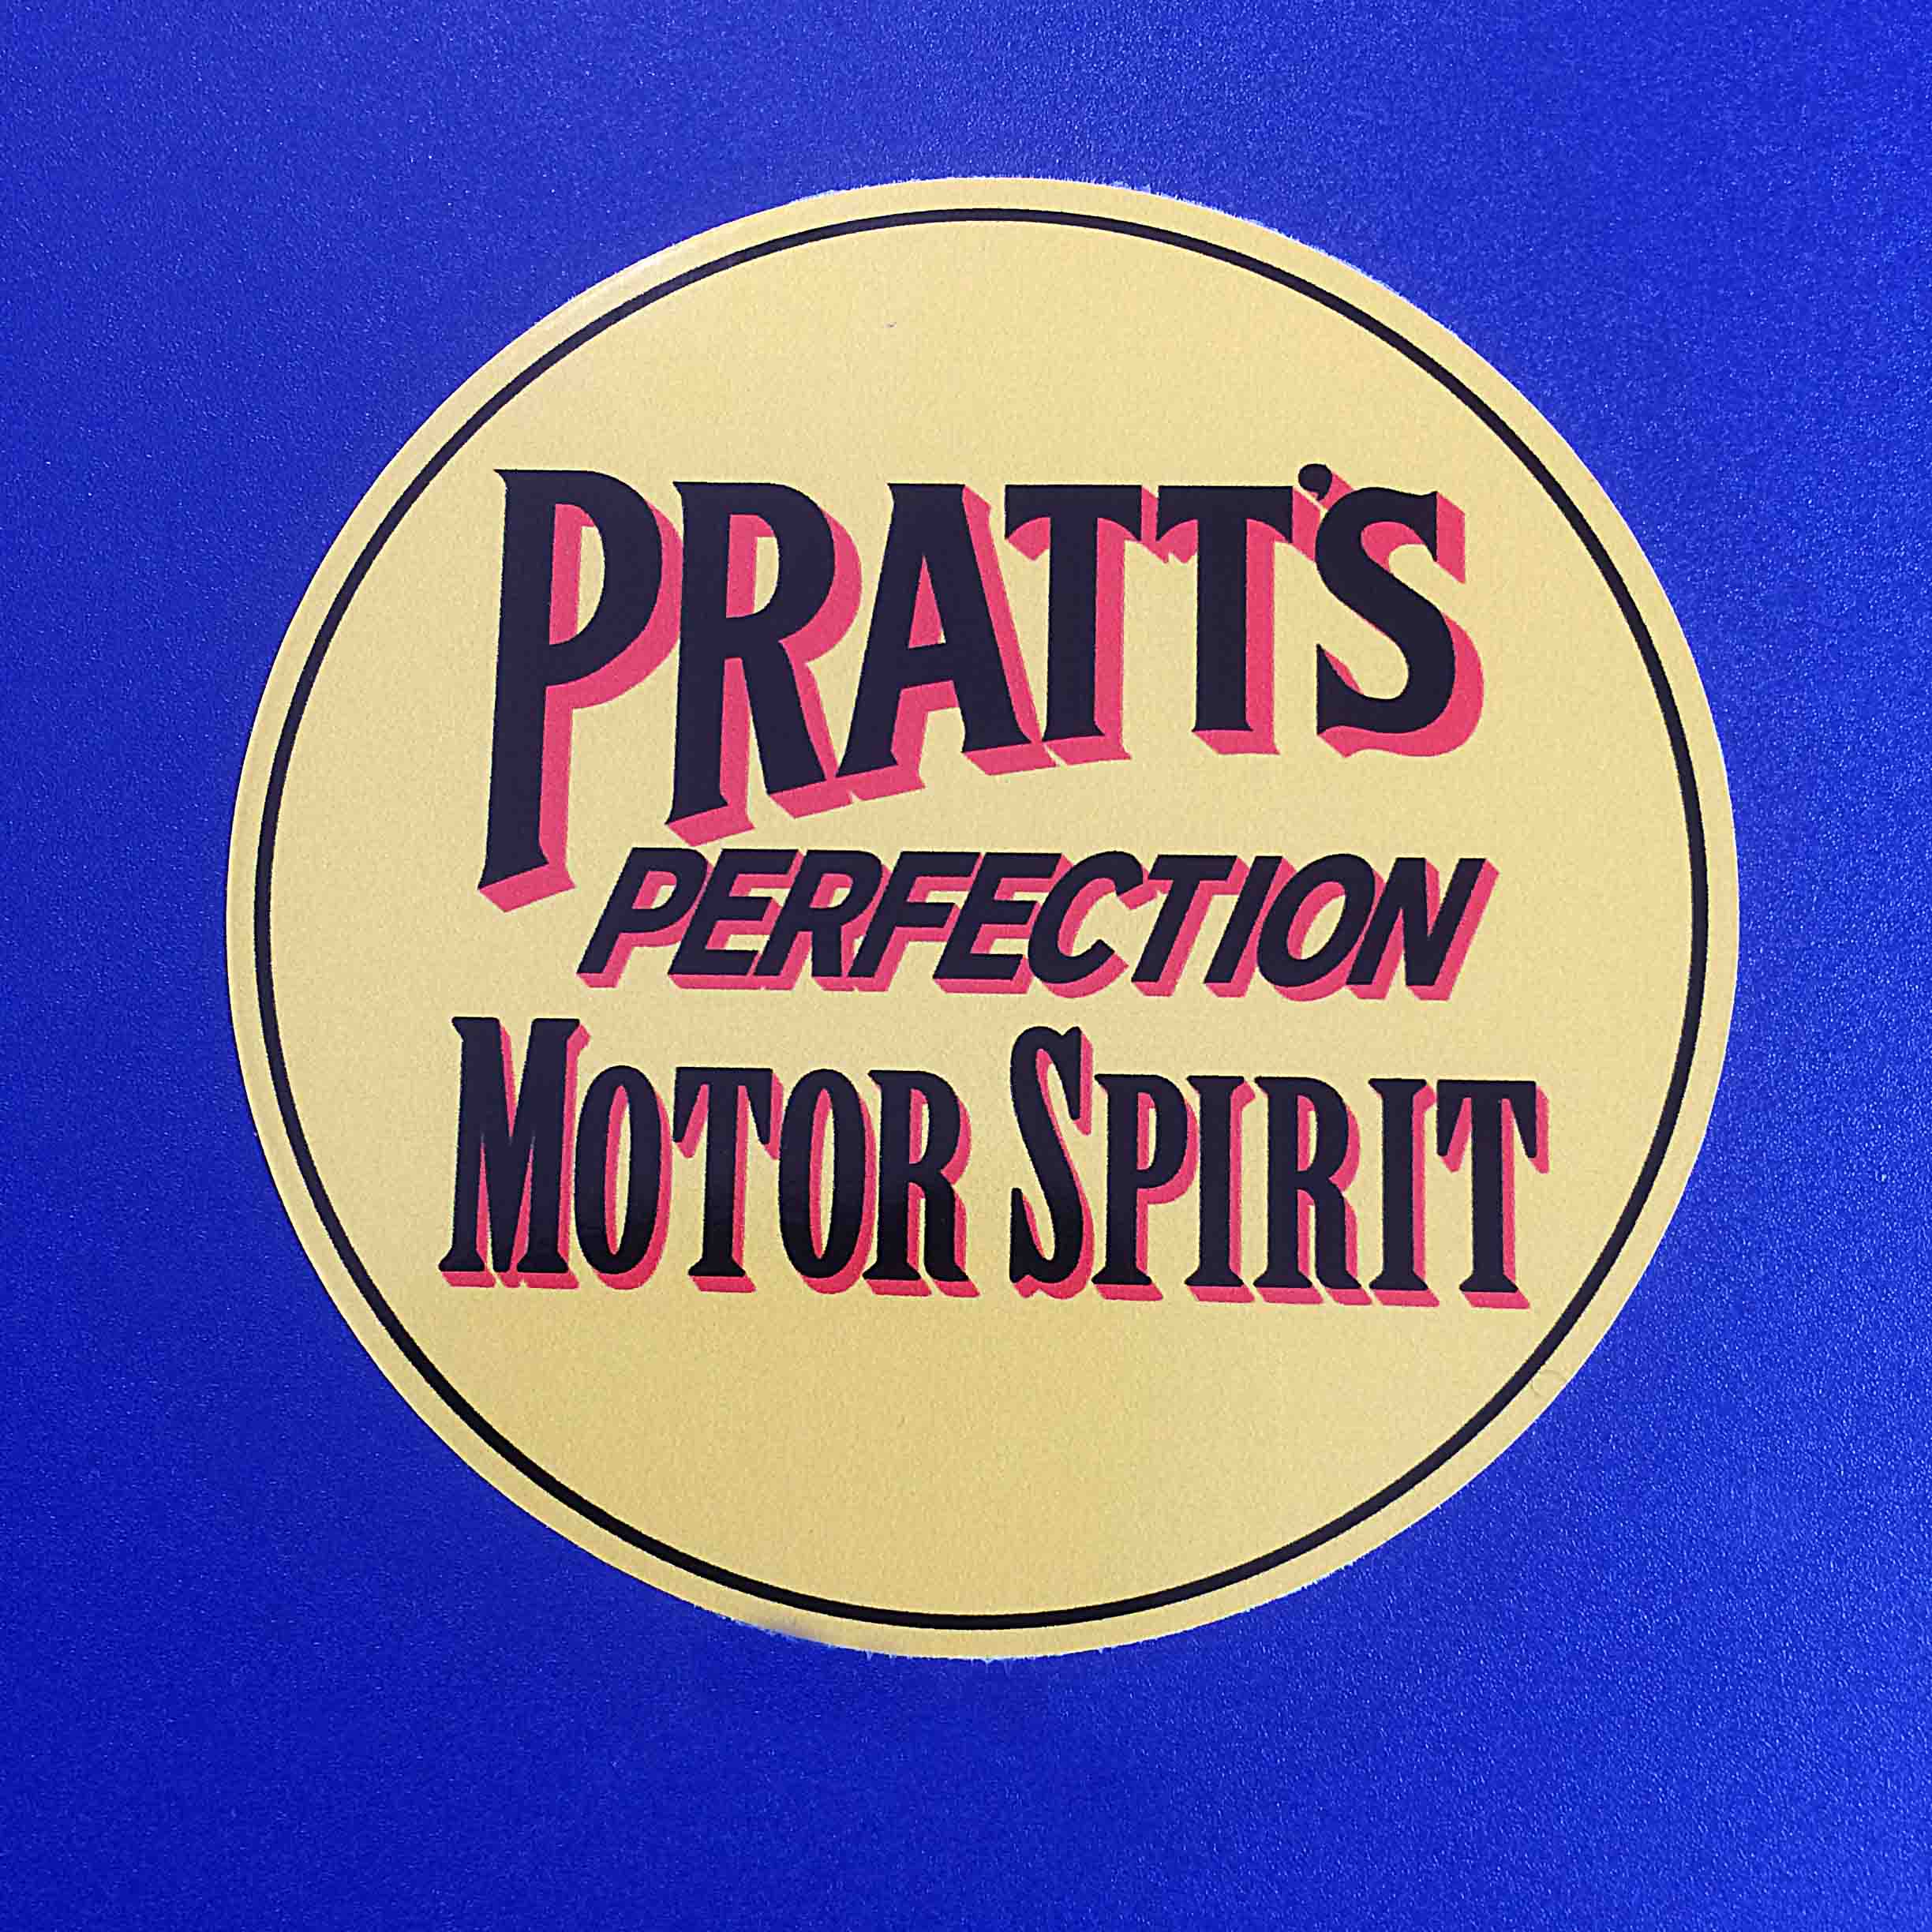 PRATTS PERFECTION MOTOR SPIRIT STICKER. Pratt's Perfection Motor Spirit. Black/red shadow lettering on a pale yellow background.